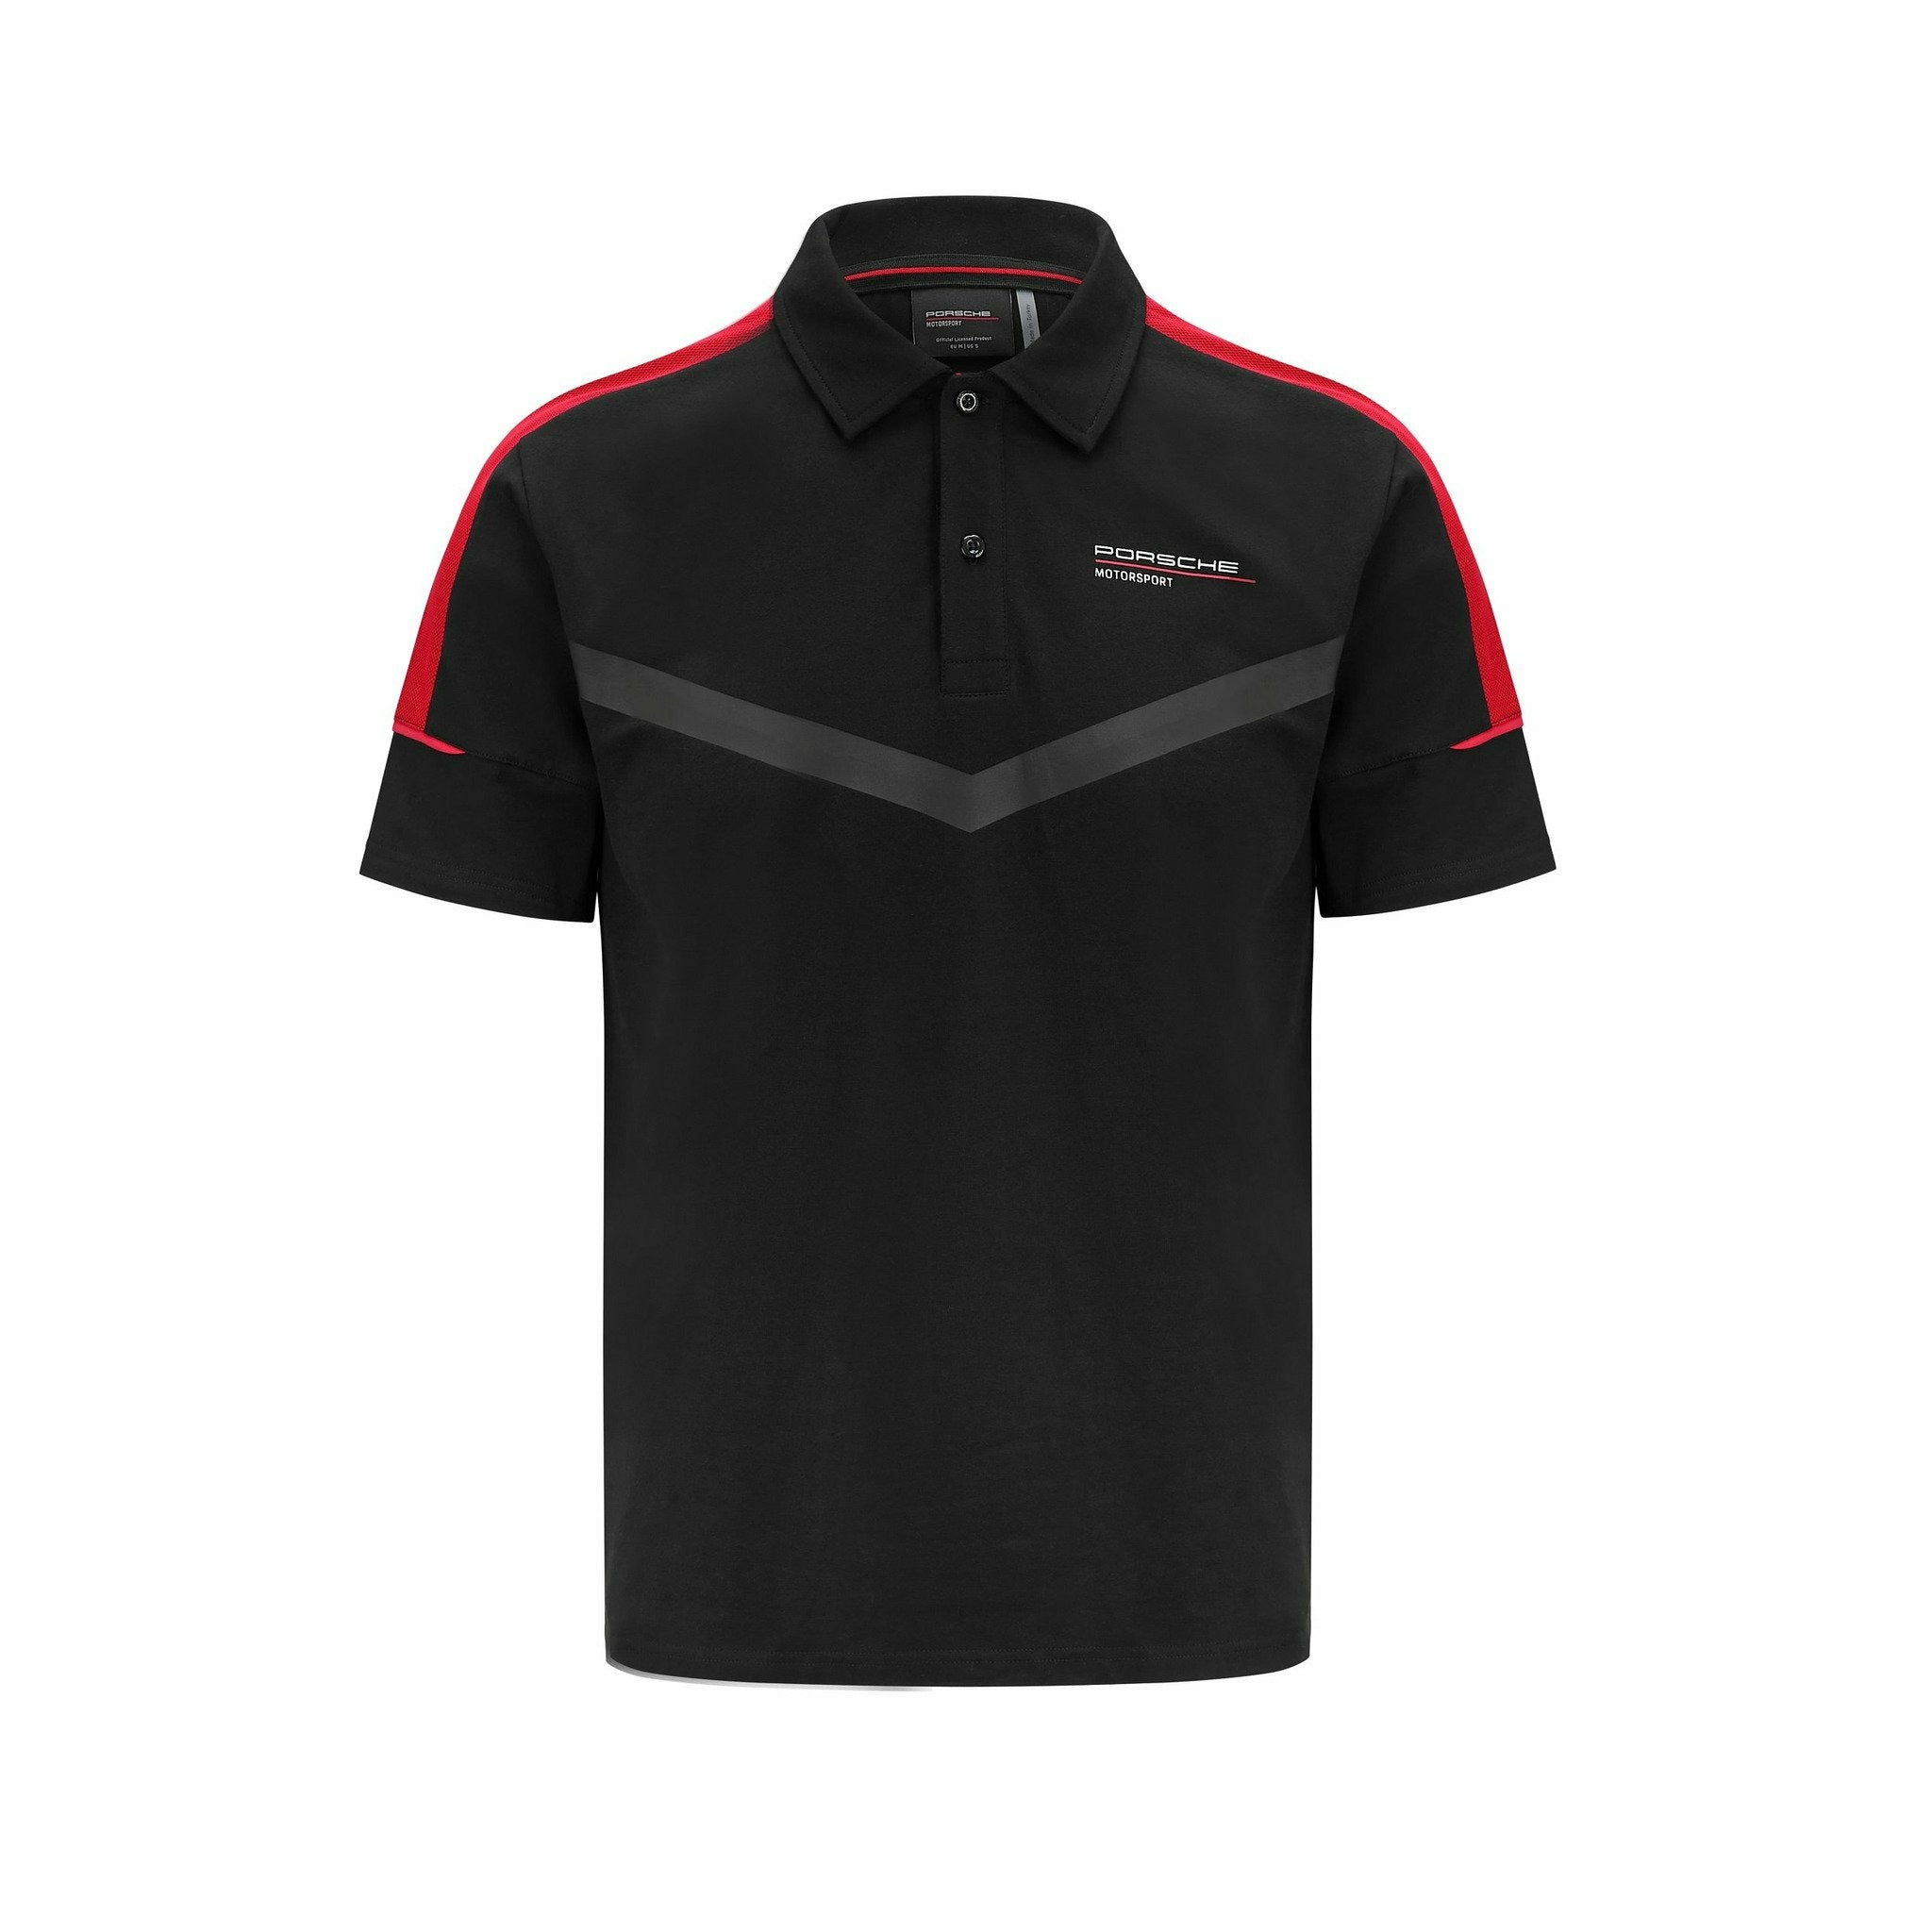 Porsche Motorsport Men's Fanwear Polo Shirt Black